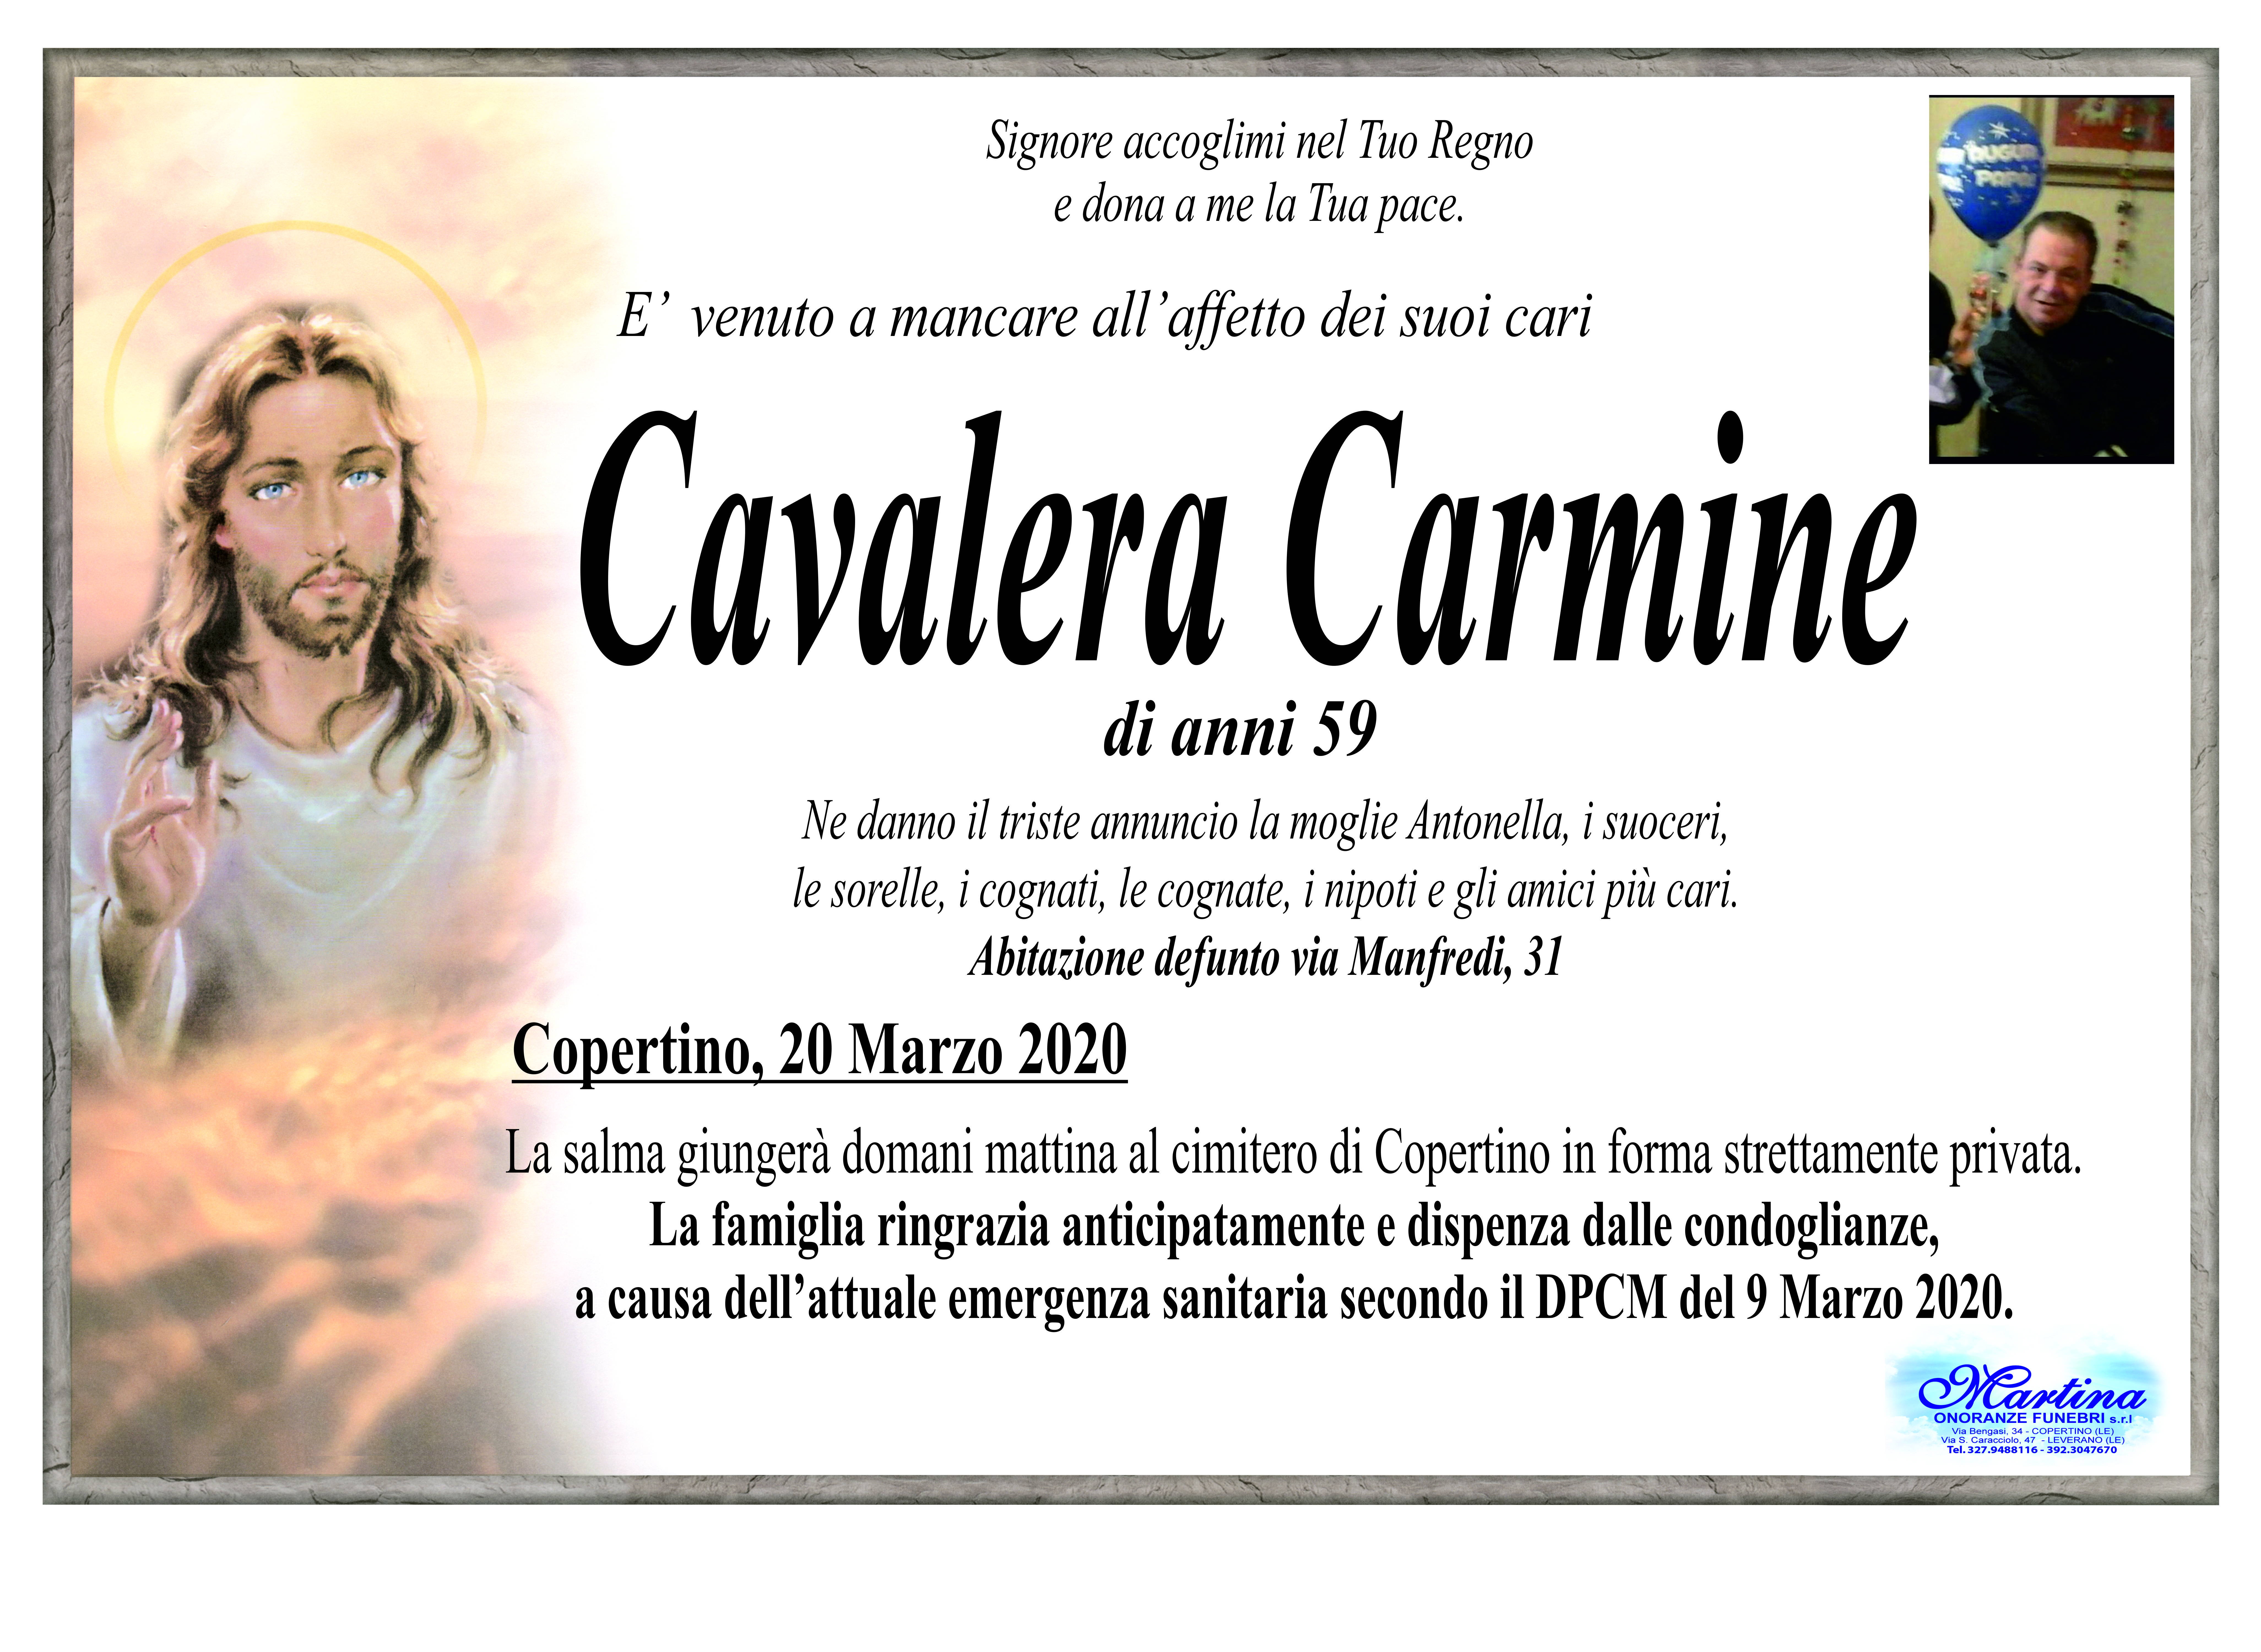 Carmine Cavalera